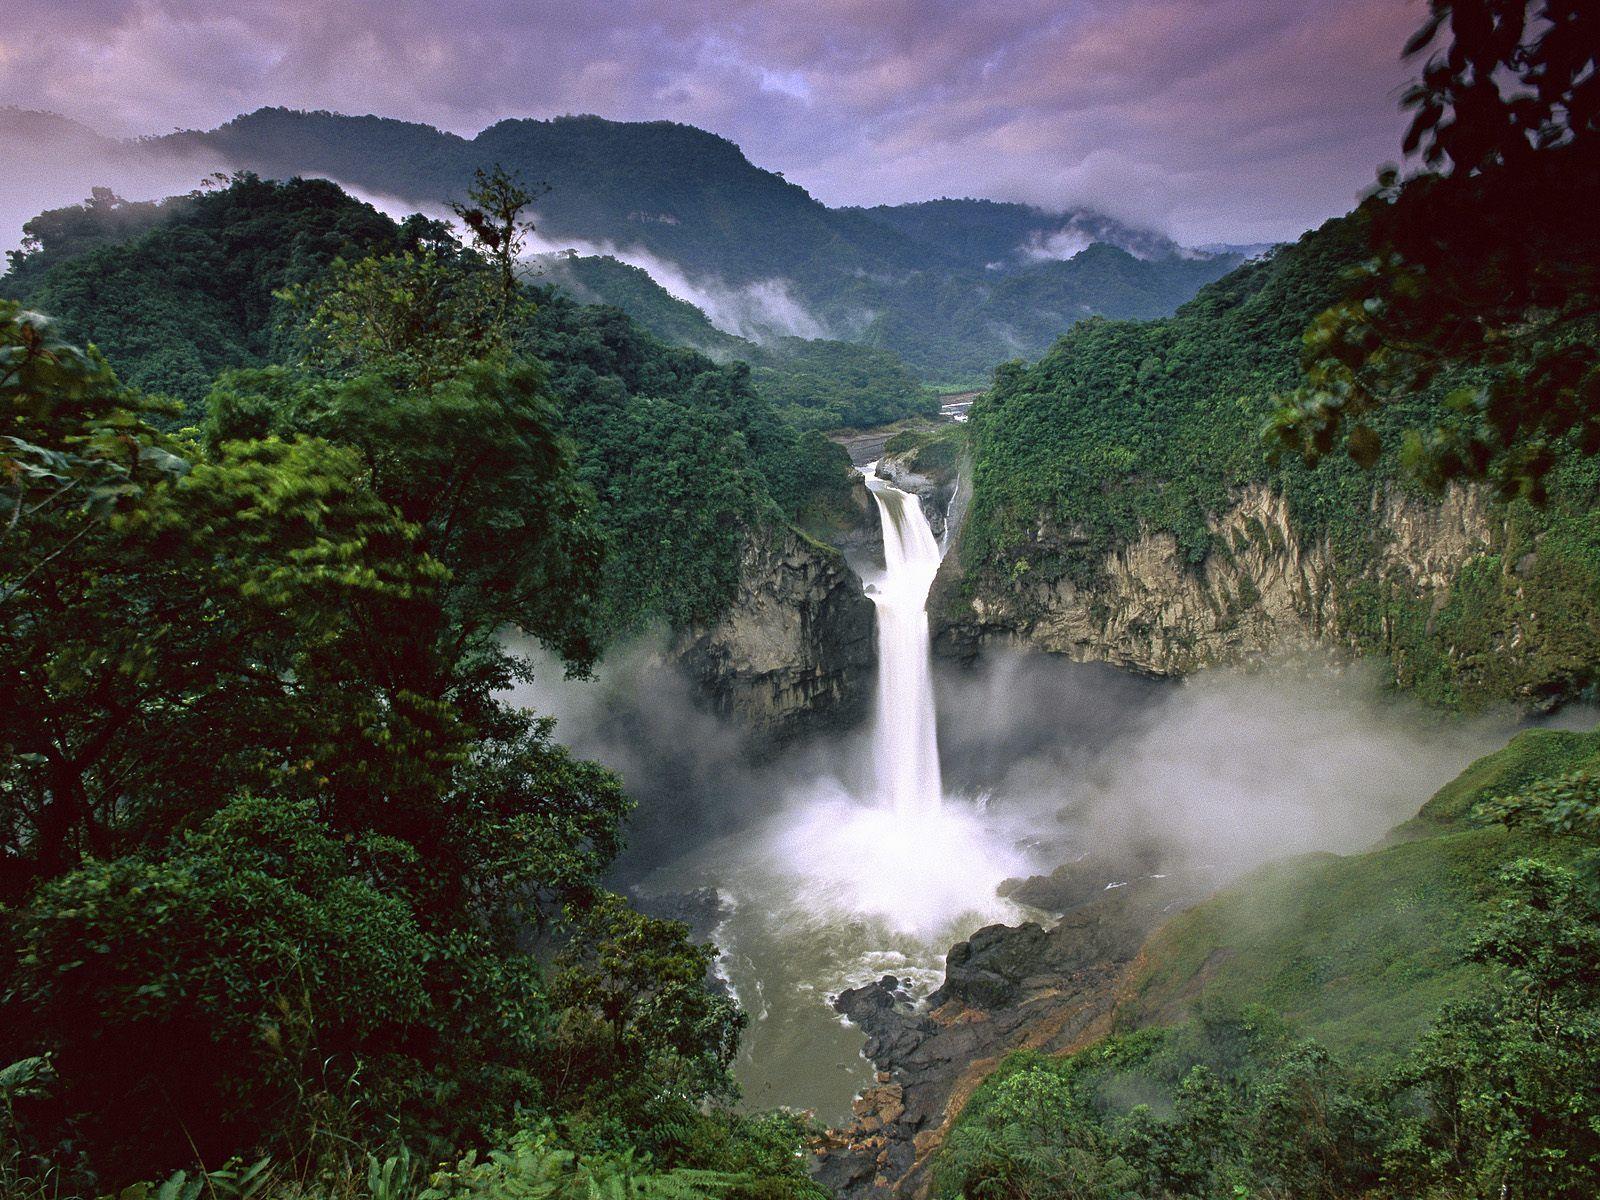 Amazon Rainforest image Amazon HD wallpaper and background photo